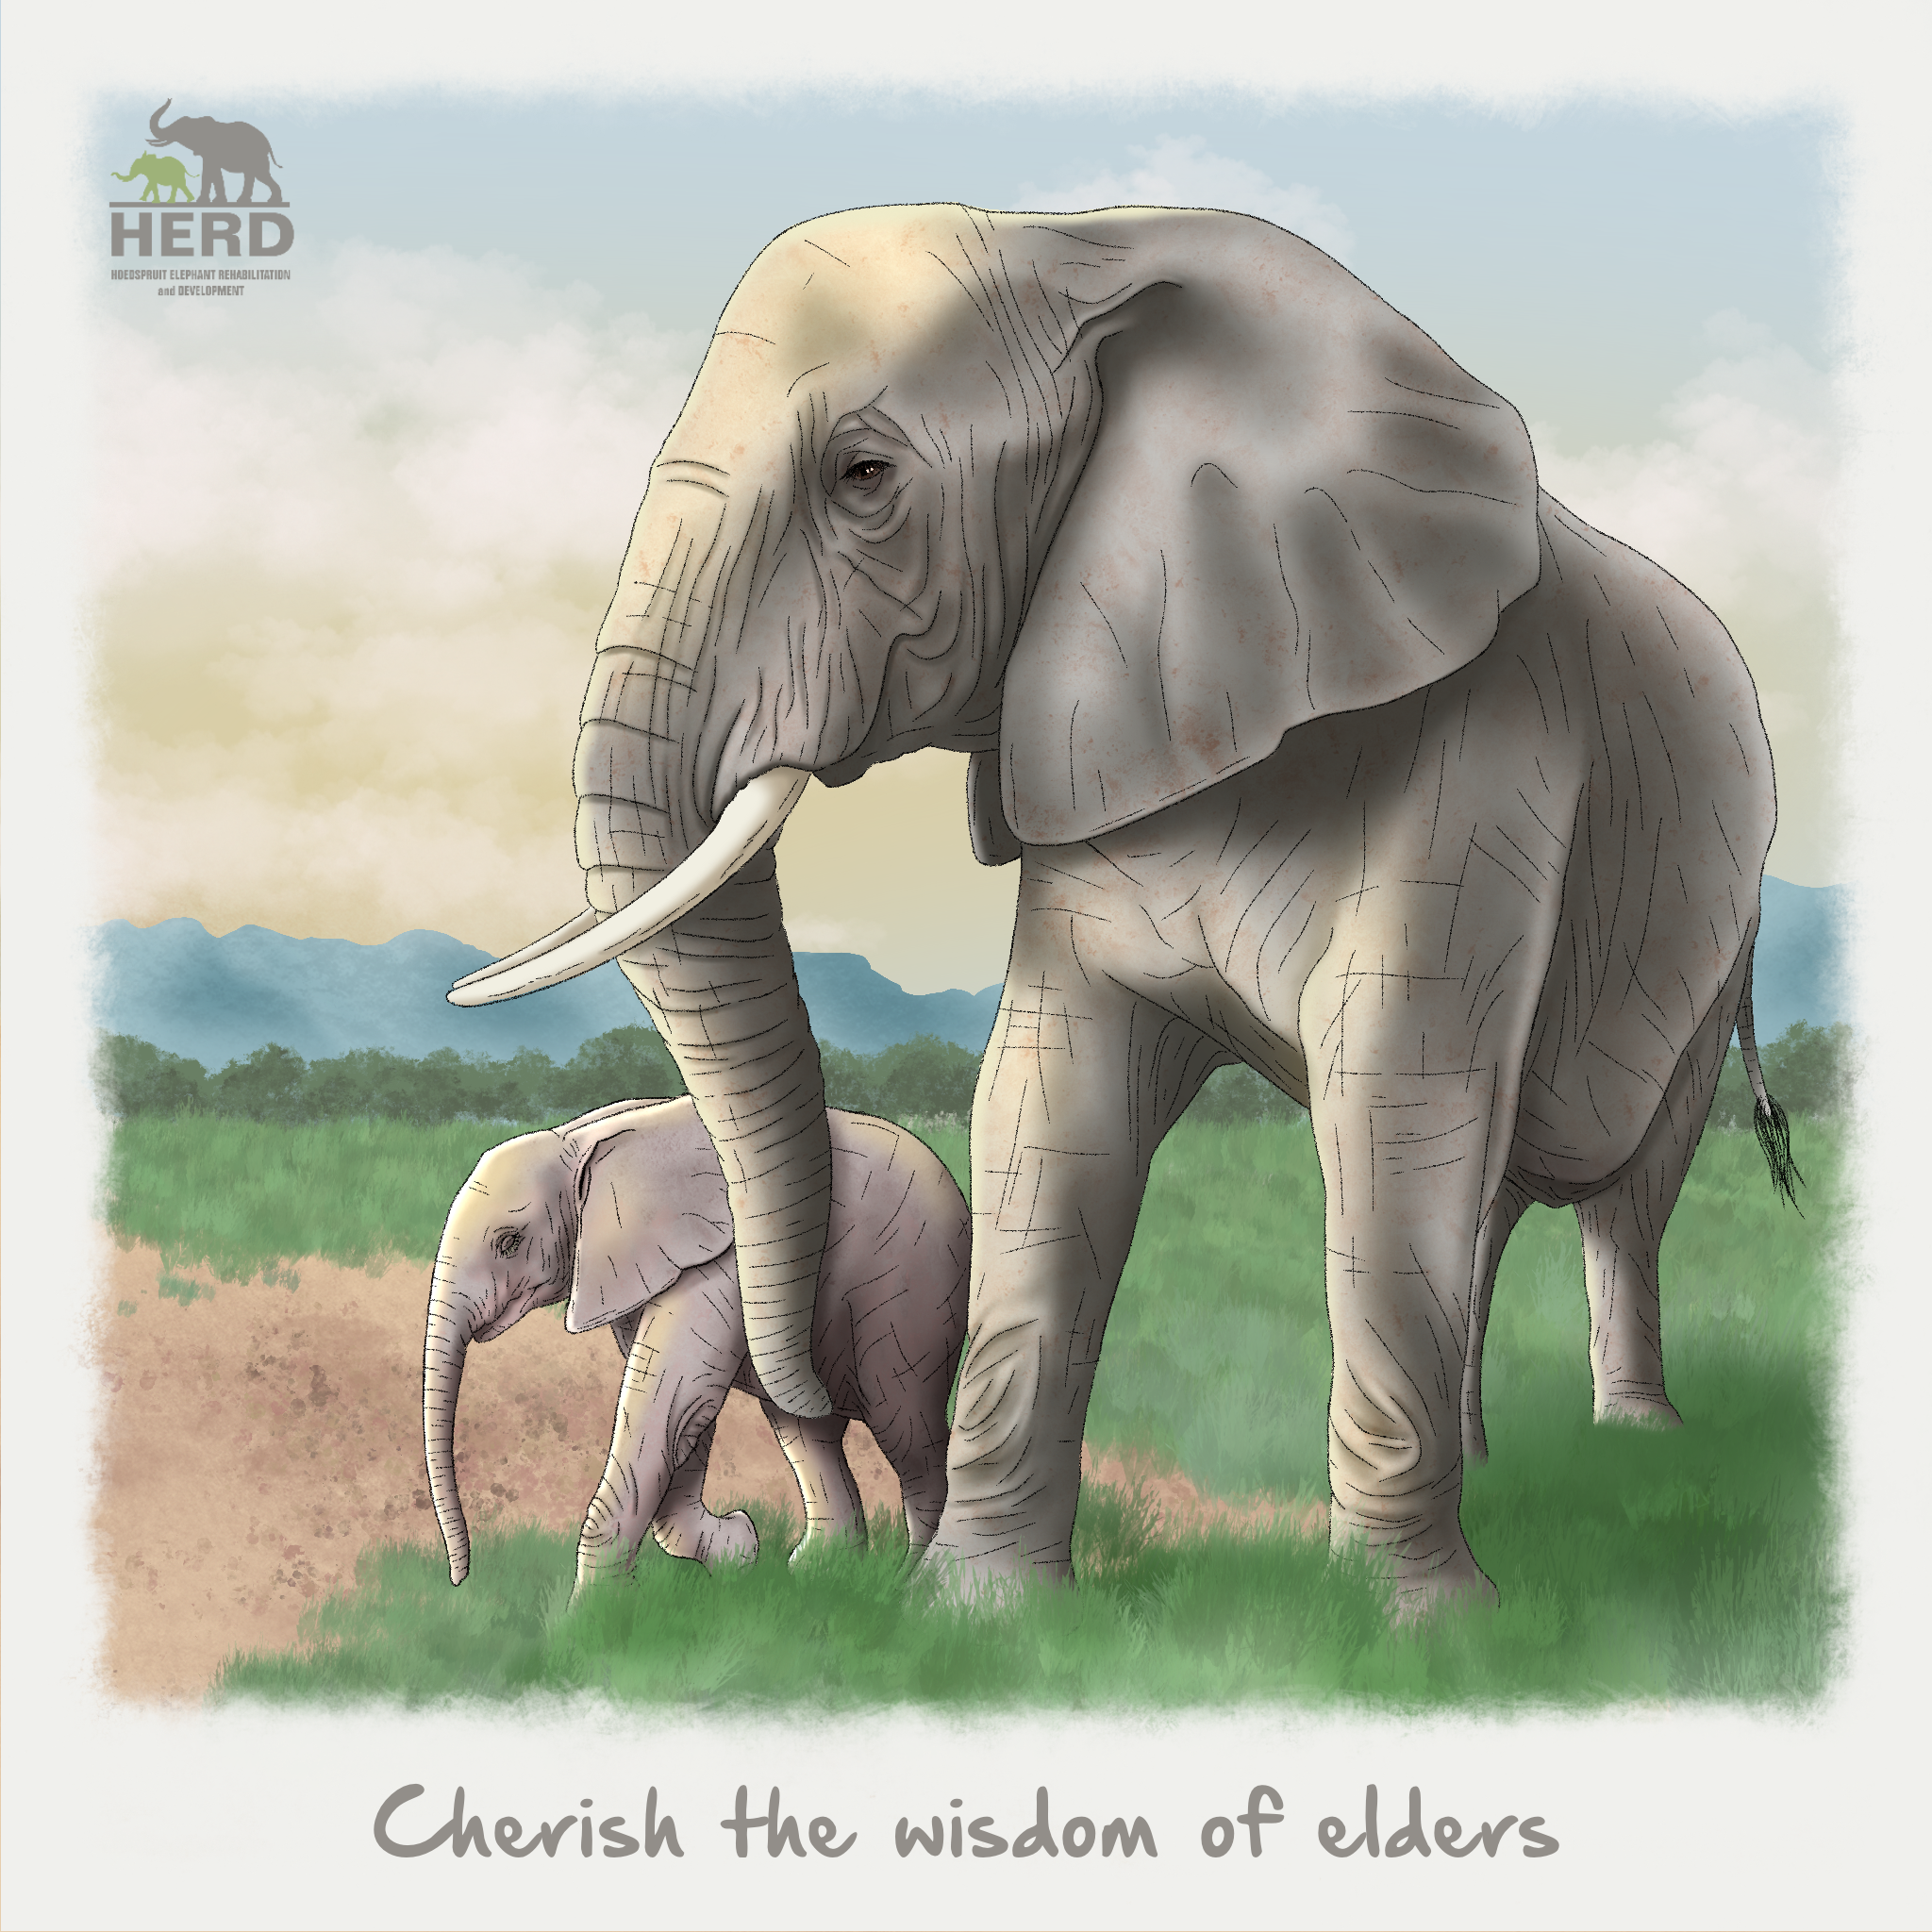 Wisdom 17 – Cherish the wisdom of elders.